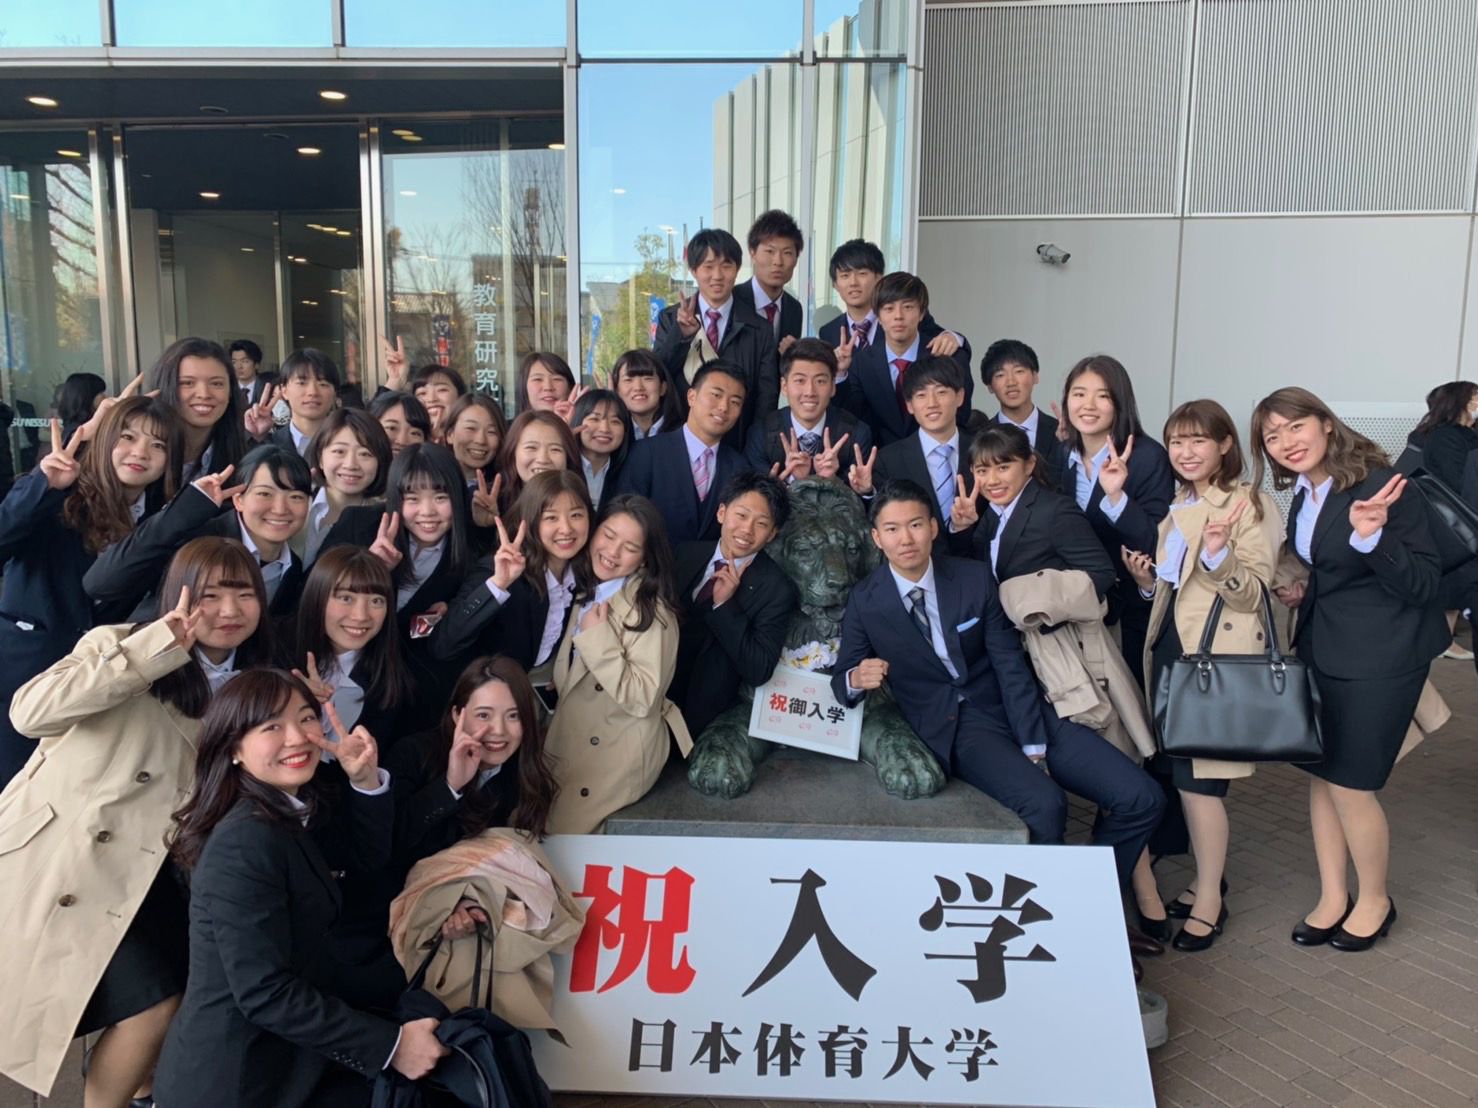 hiroshi4.4.2019-1.jpg